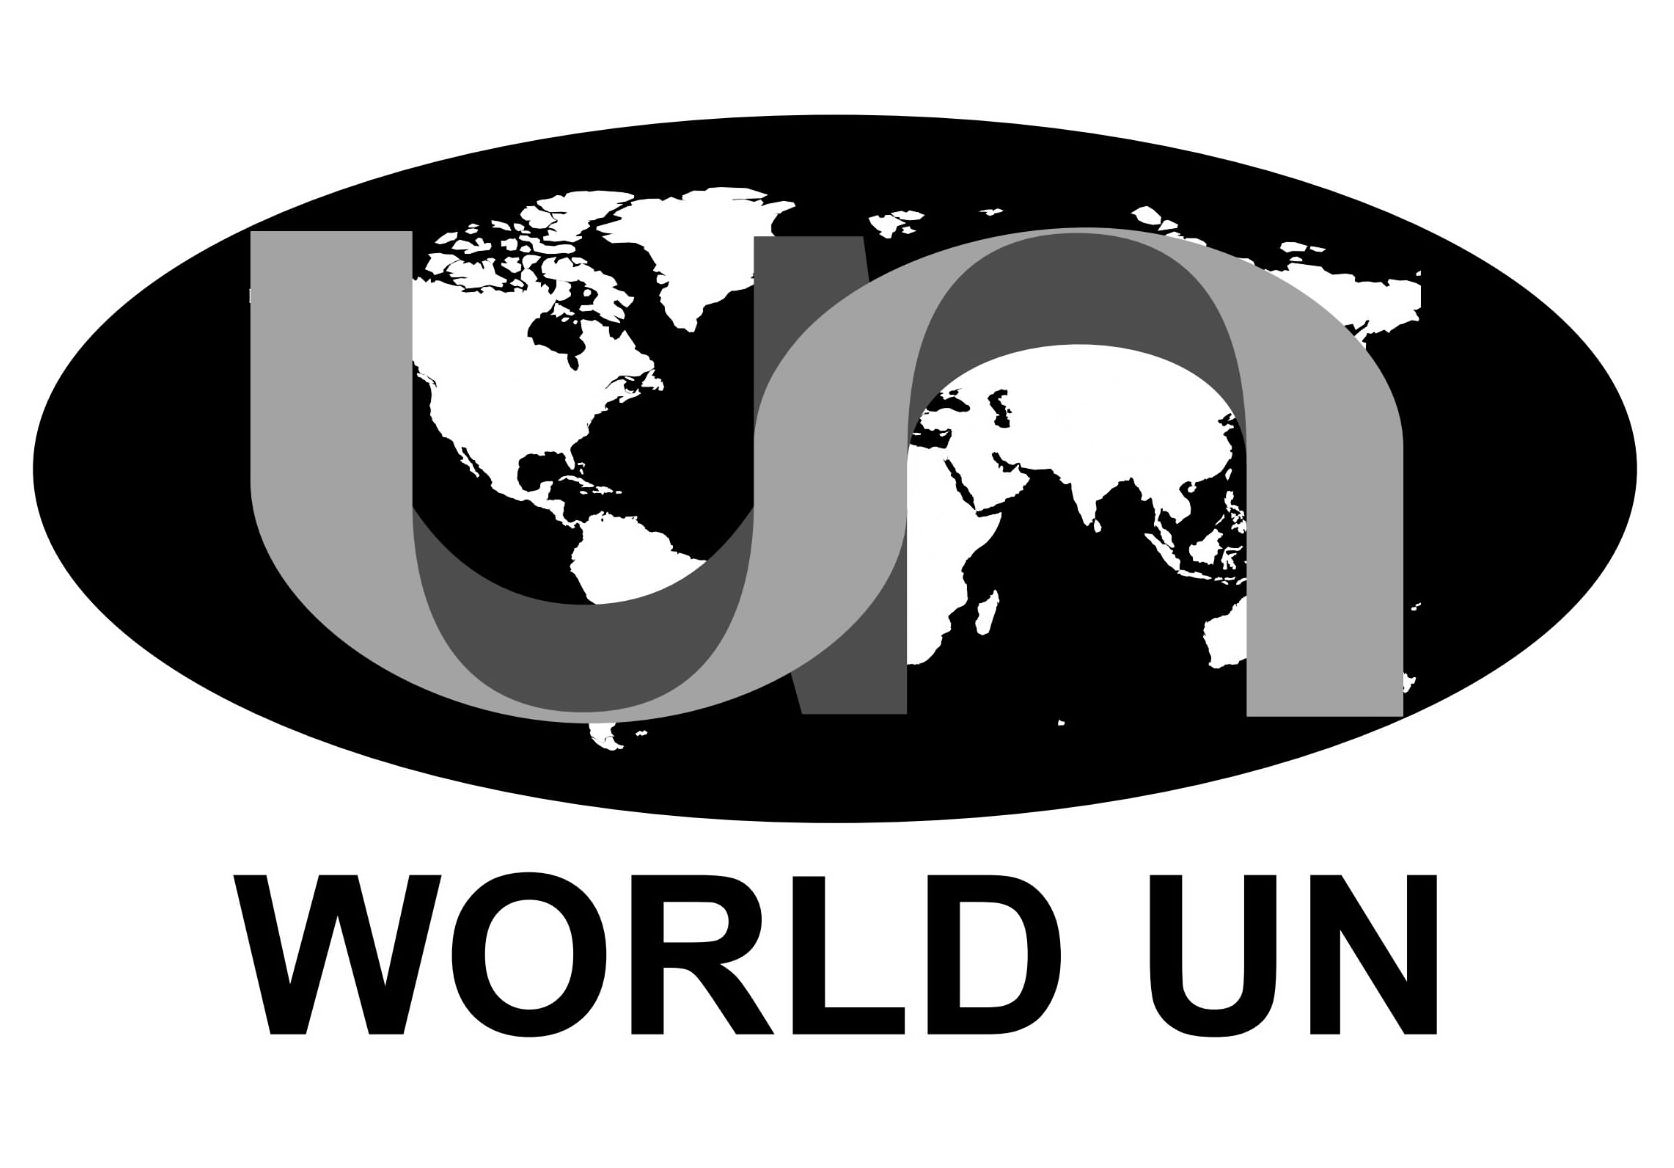  S WORLD UN